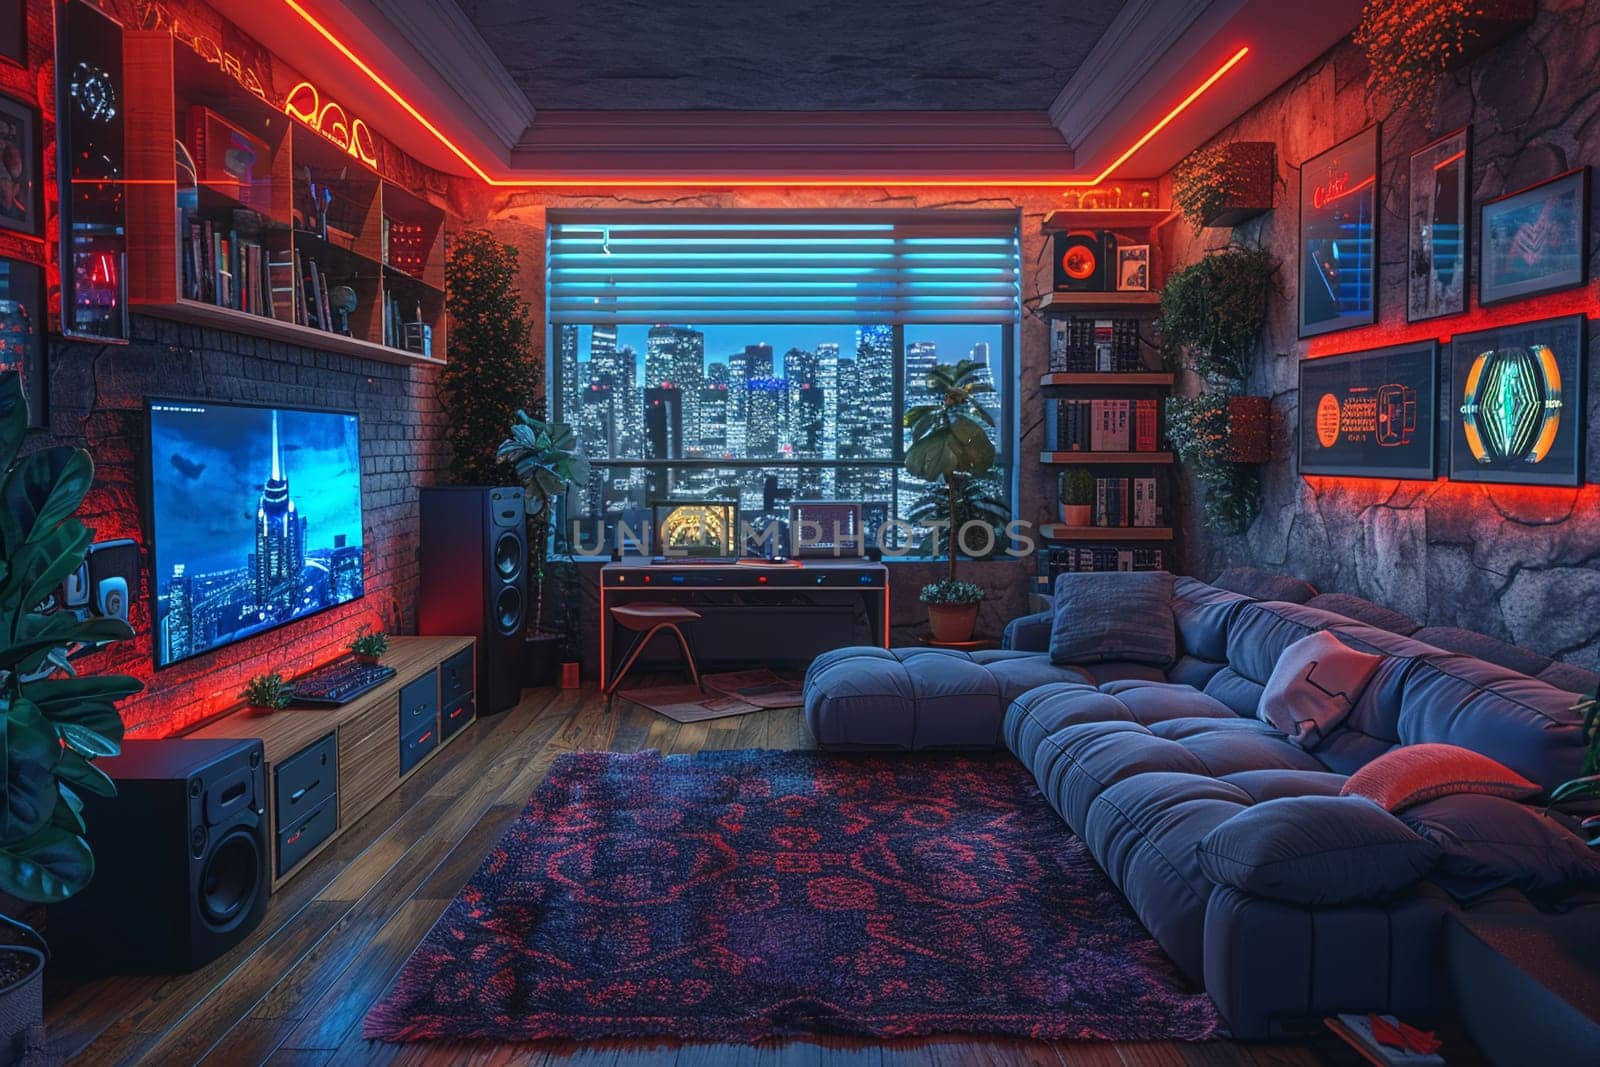 Cyberpunk gaming den with neon lights and high-tech setups3D render by Benzoix